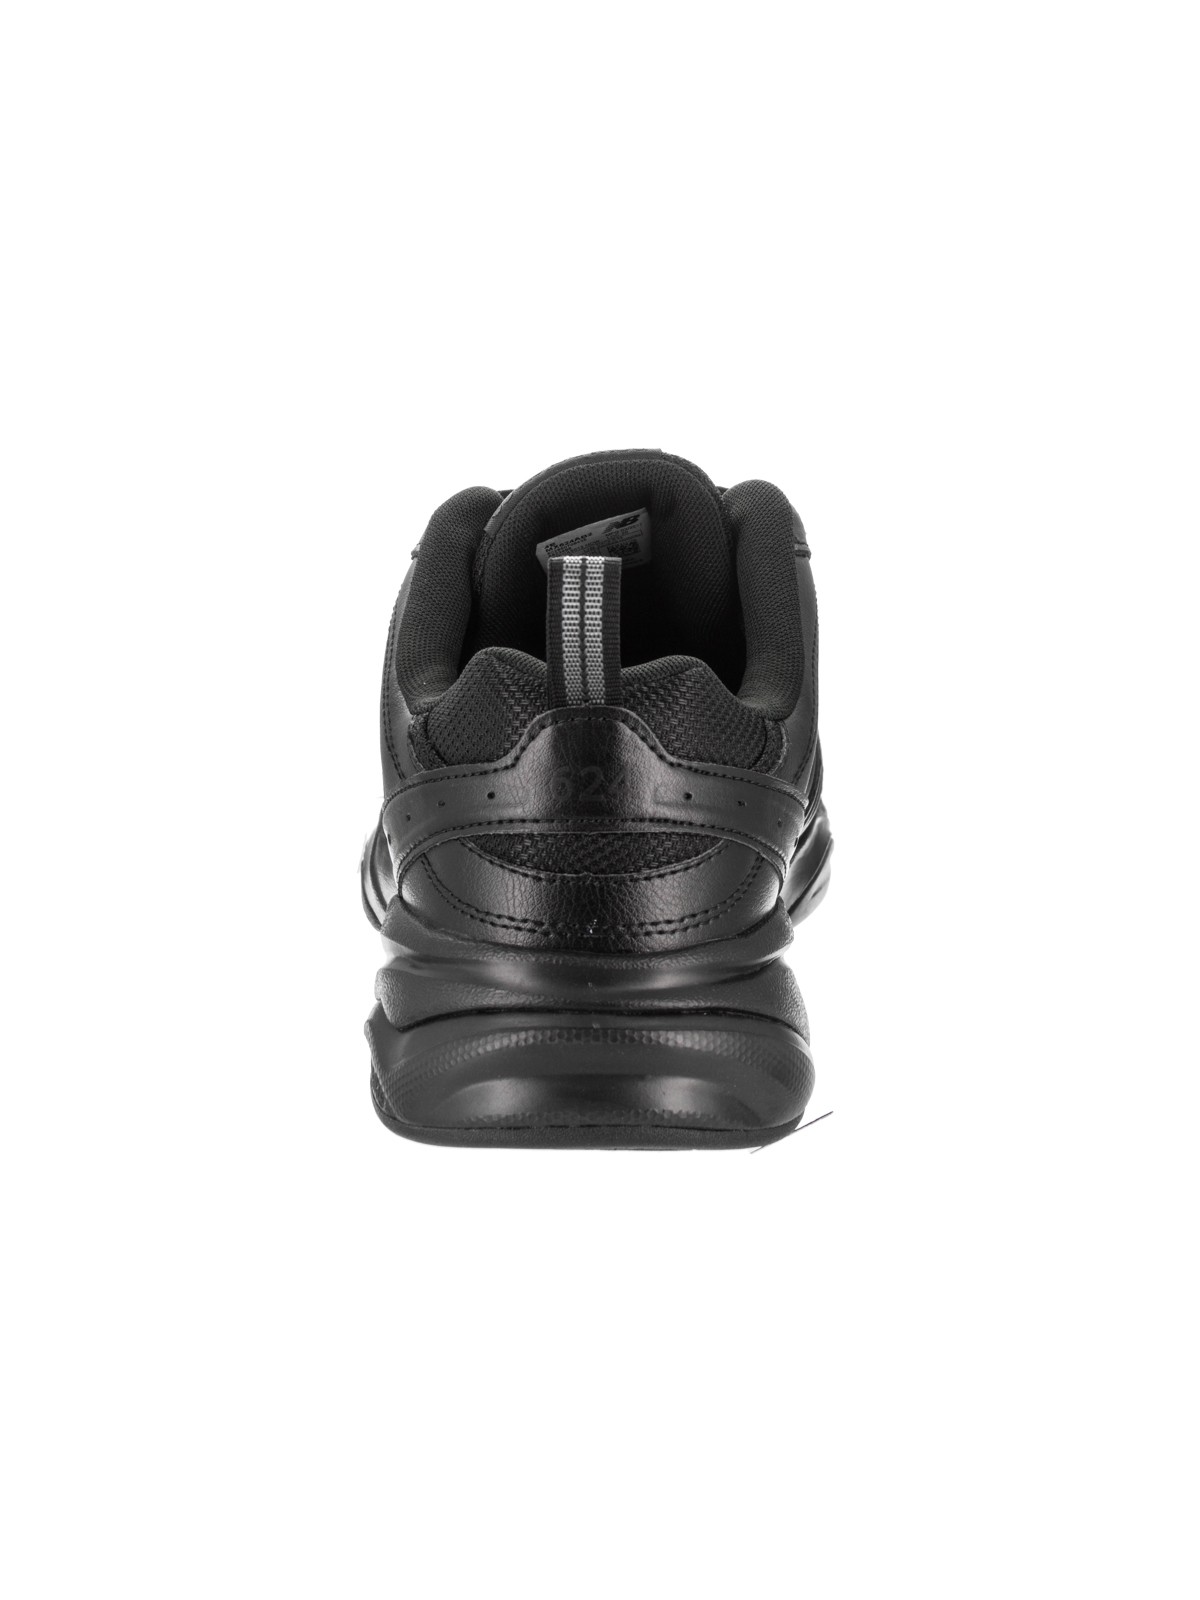 new balance men's mx624v2 casual comfort training shoe, black, 10.5 4e us - image 4 of 5